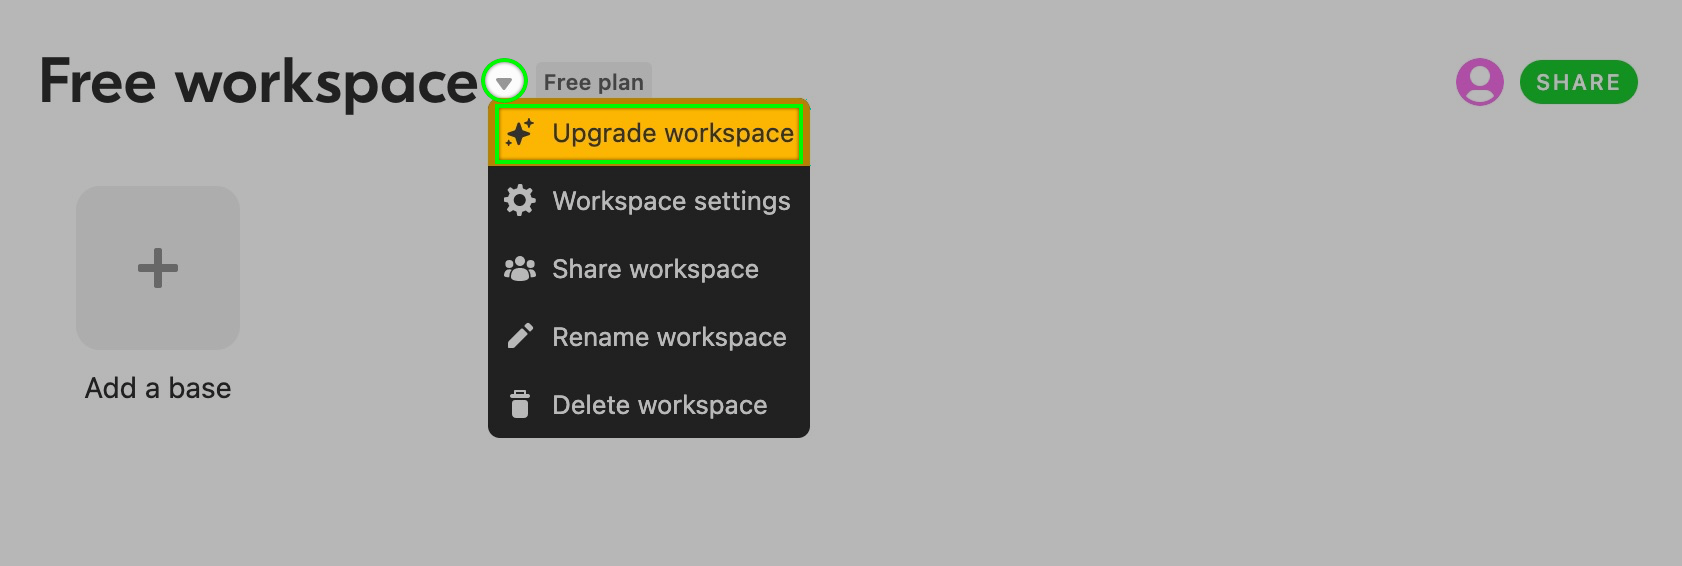 upgrade_workspace.png